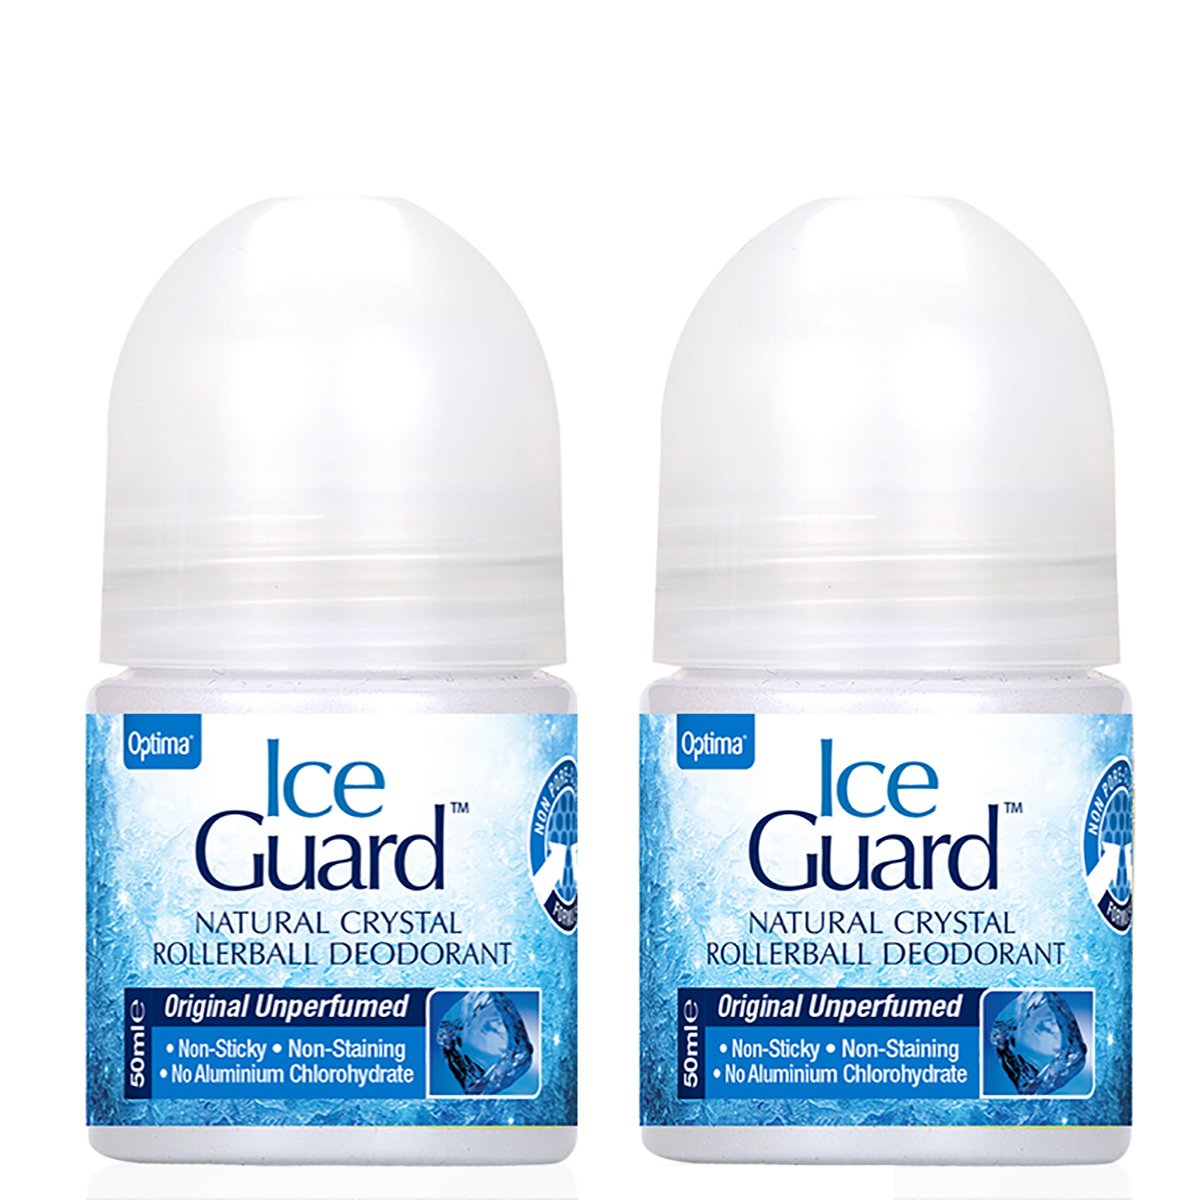 Optima Πακέτο Προσφοράς Ice Guard Rollerball Deodorant Αποσμητικό Από Φυσικά Μεταλλικά Άλατα 2x50ml, -50% στο 2ο Προϊόν